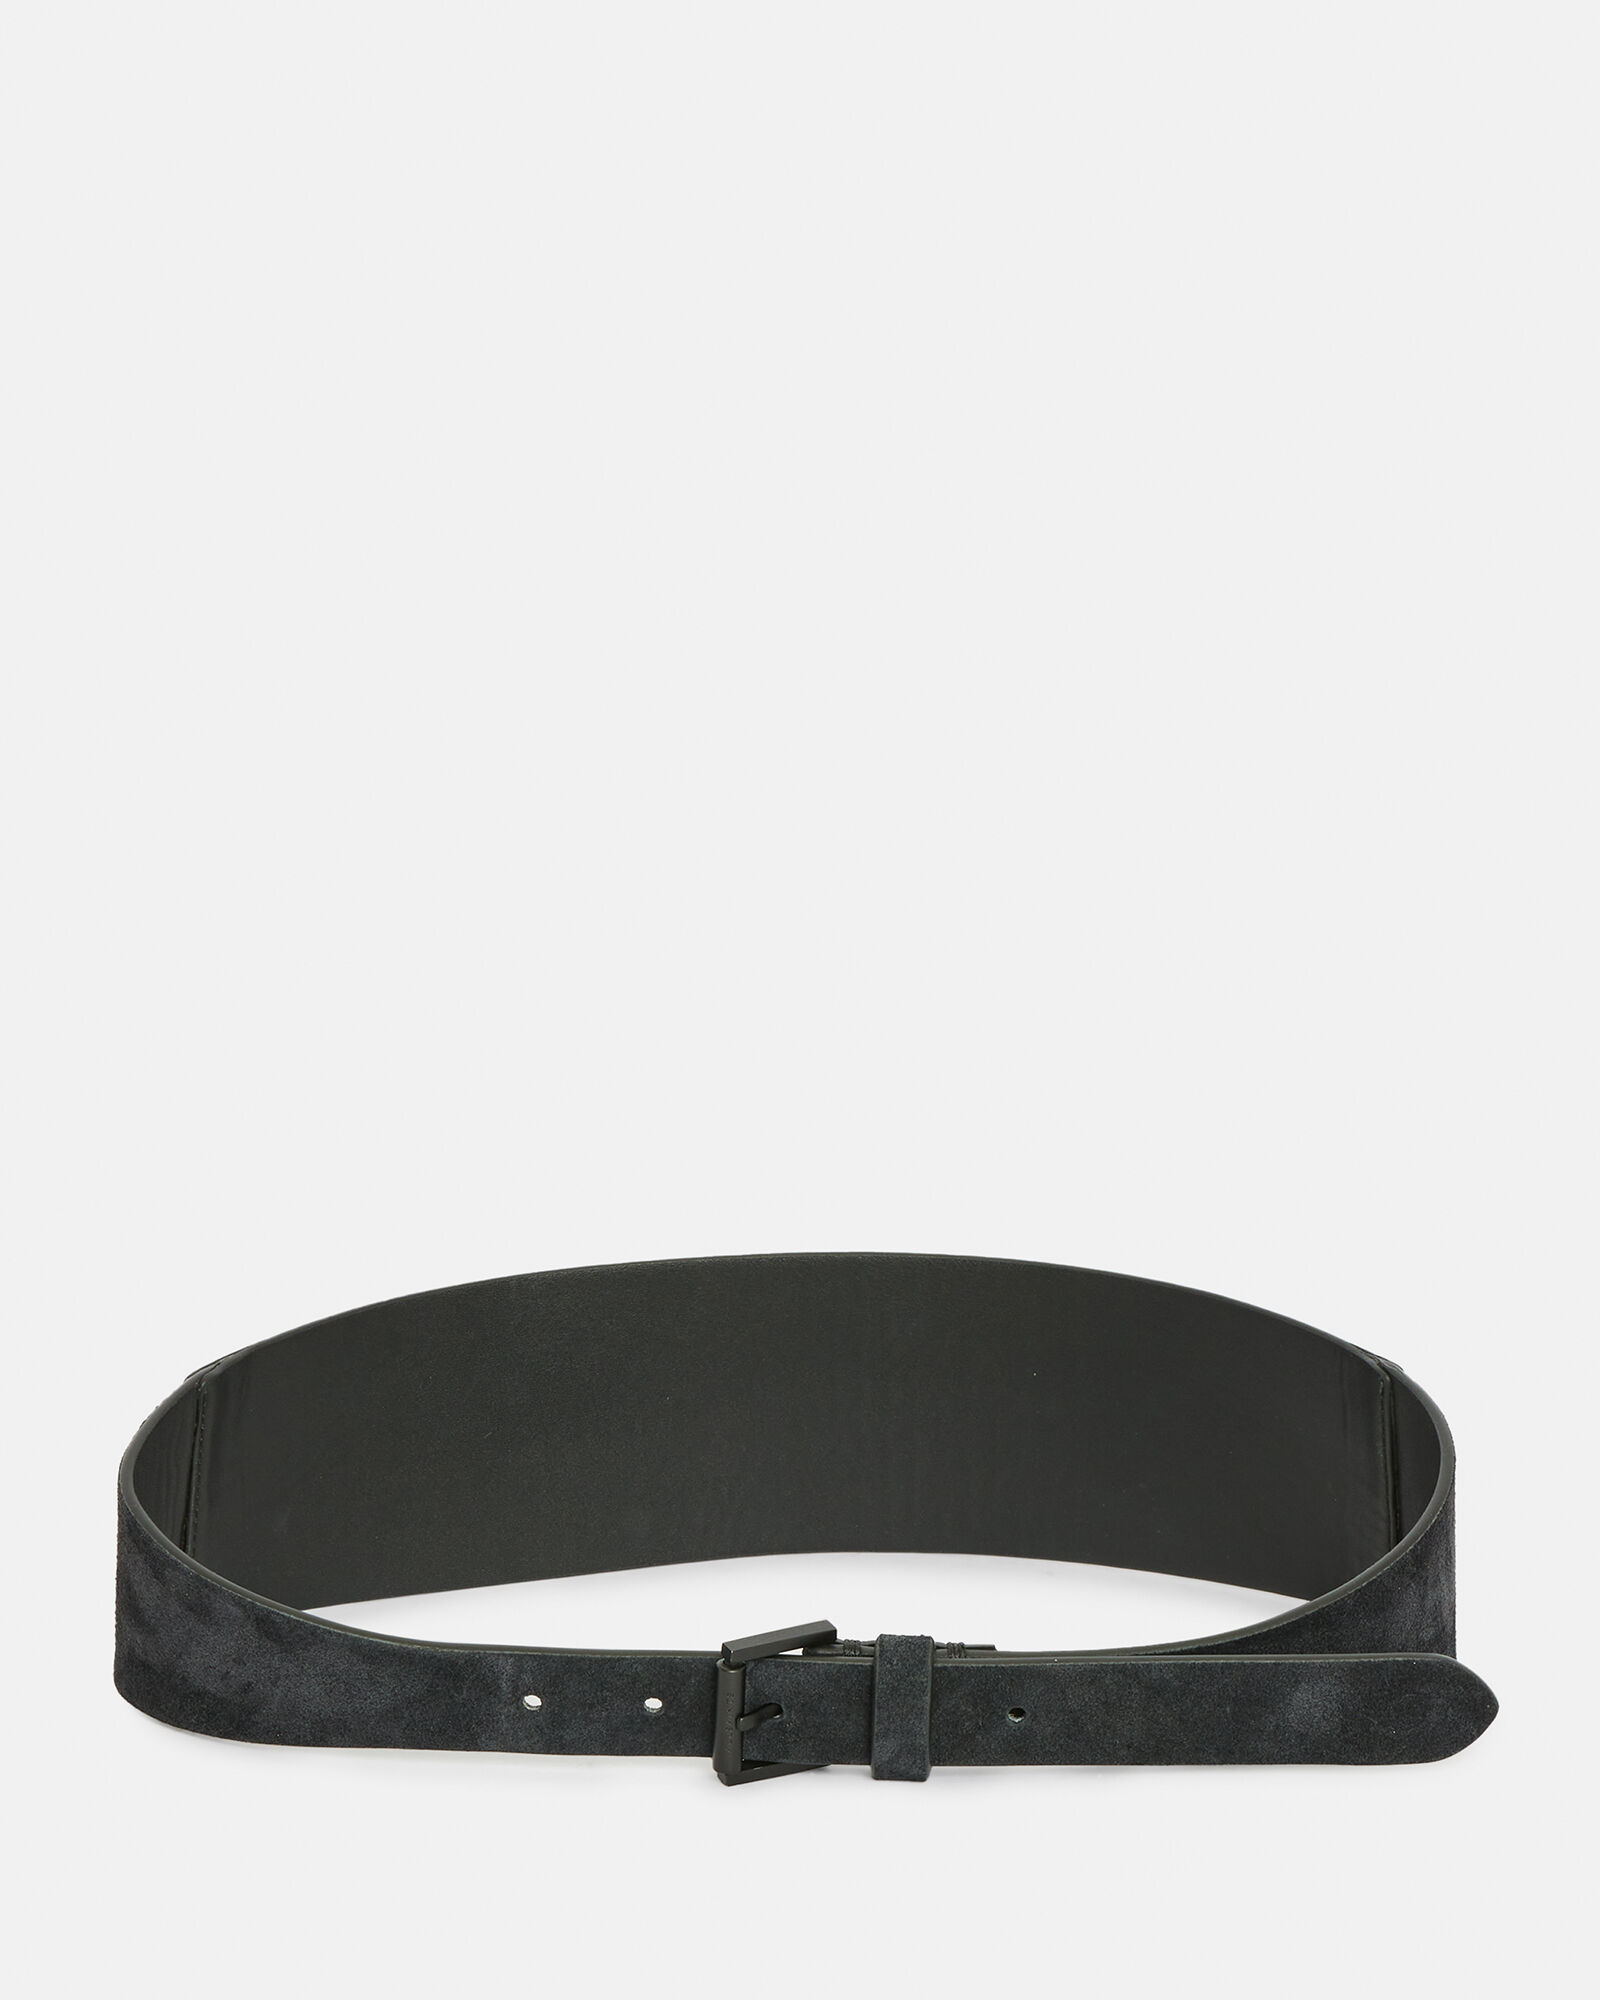 Simi Leather Studded Wide Waist Belt BLACK/DULL NICKEL | ALLSAINTS